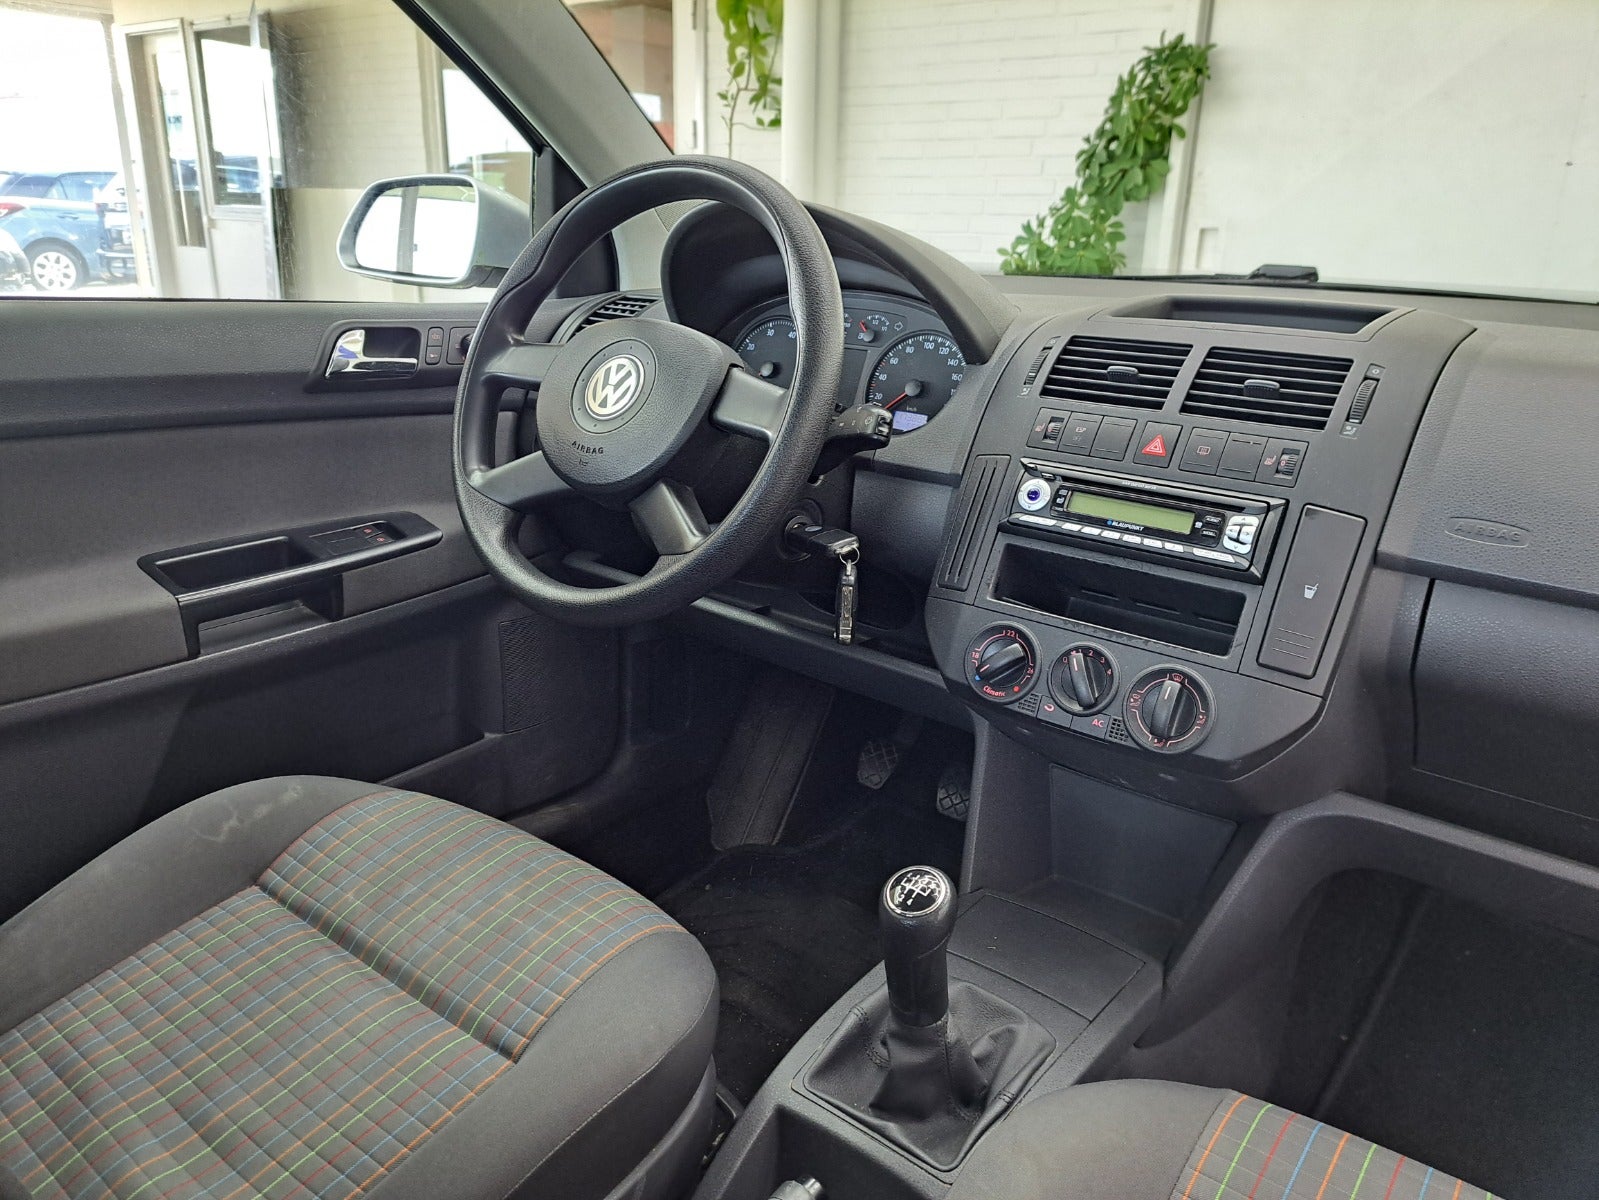 VW Polo 2006